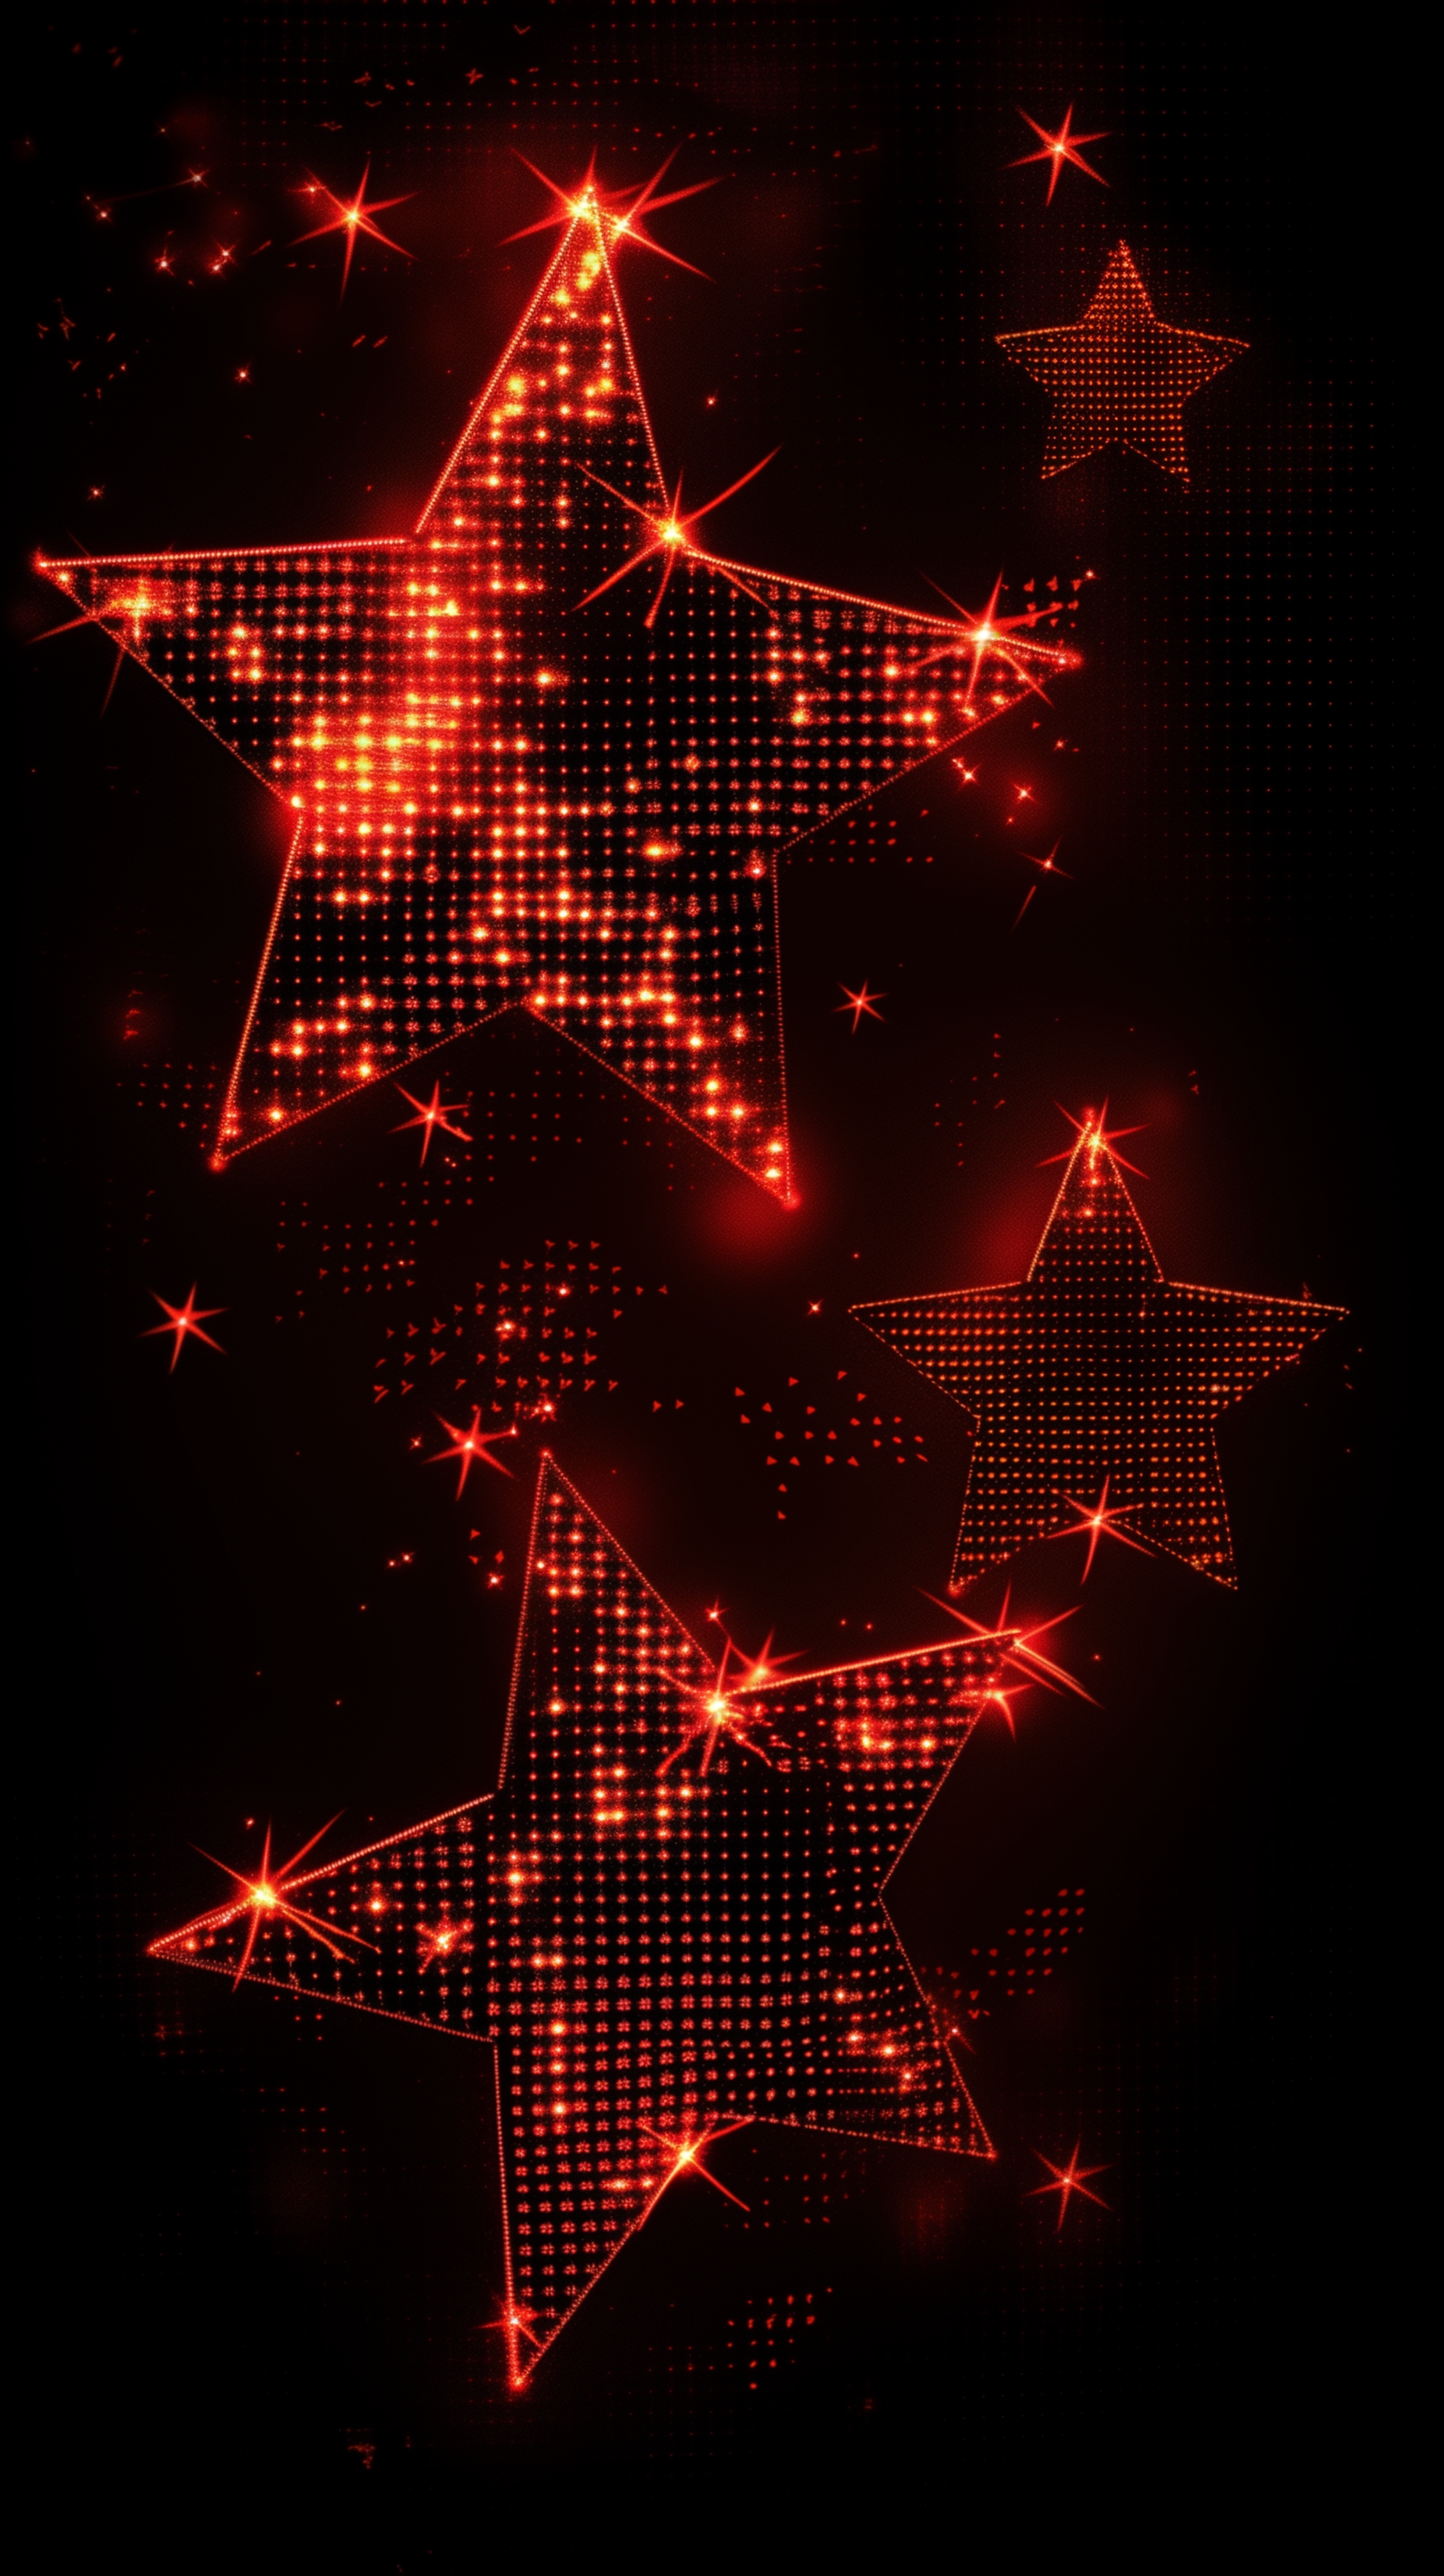 Bright Red Stars Sparkle on Dark Background Fondo de pantalla[73d88830ab094892bad0]